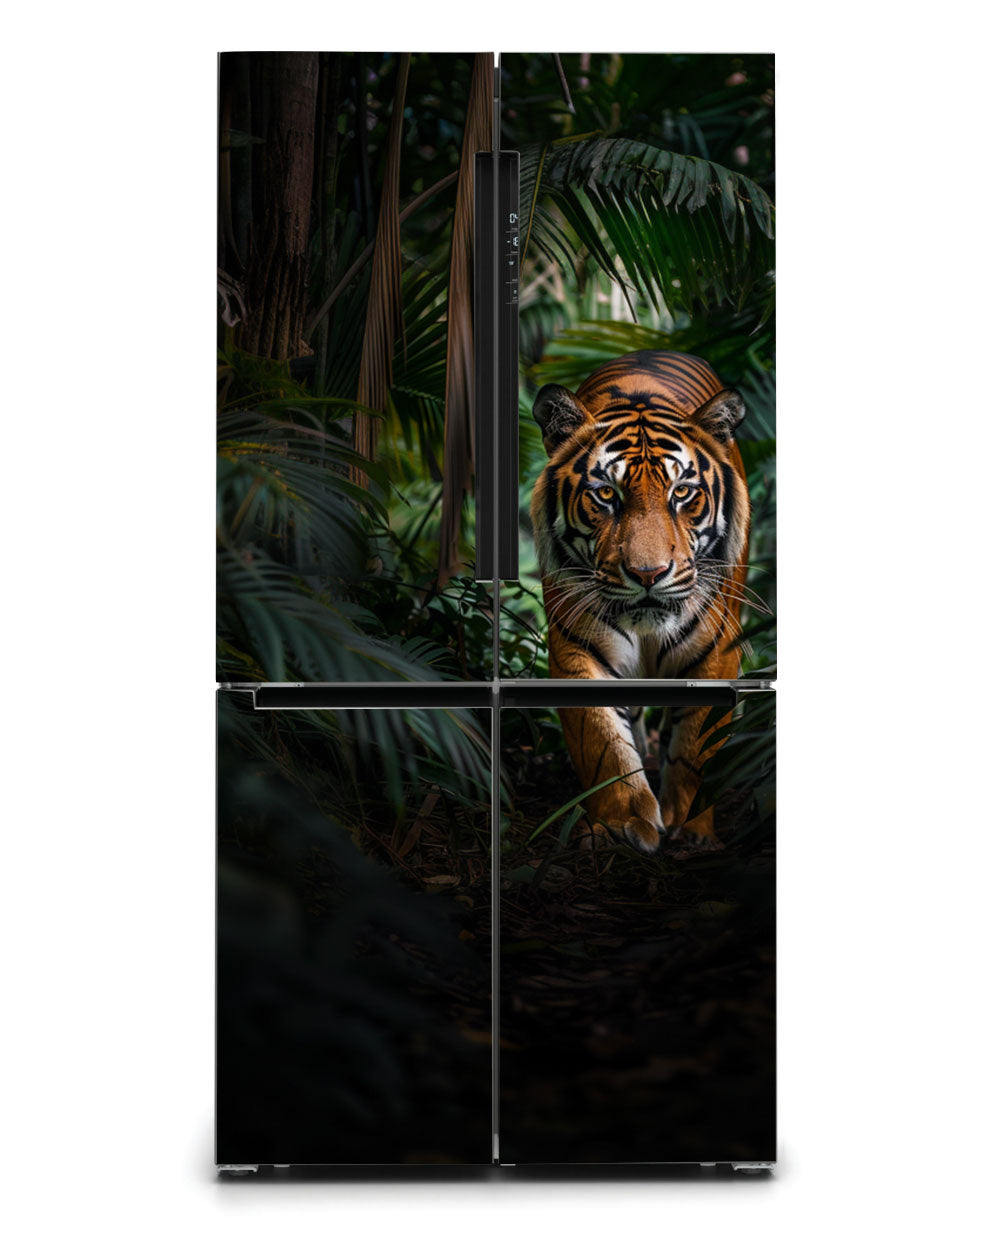 A tiger in the jungle